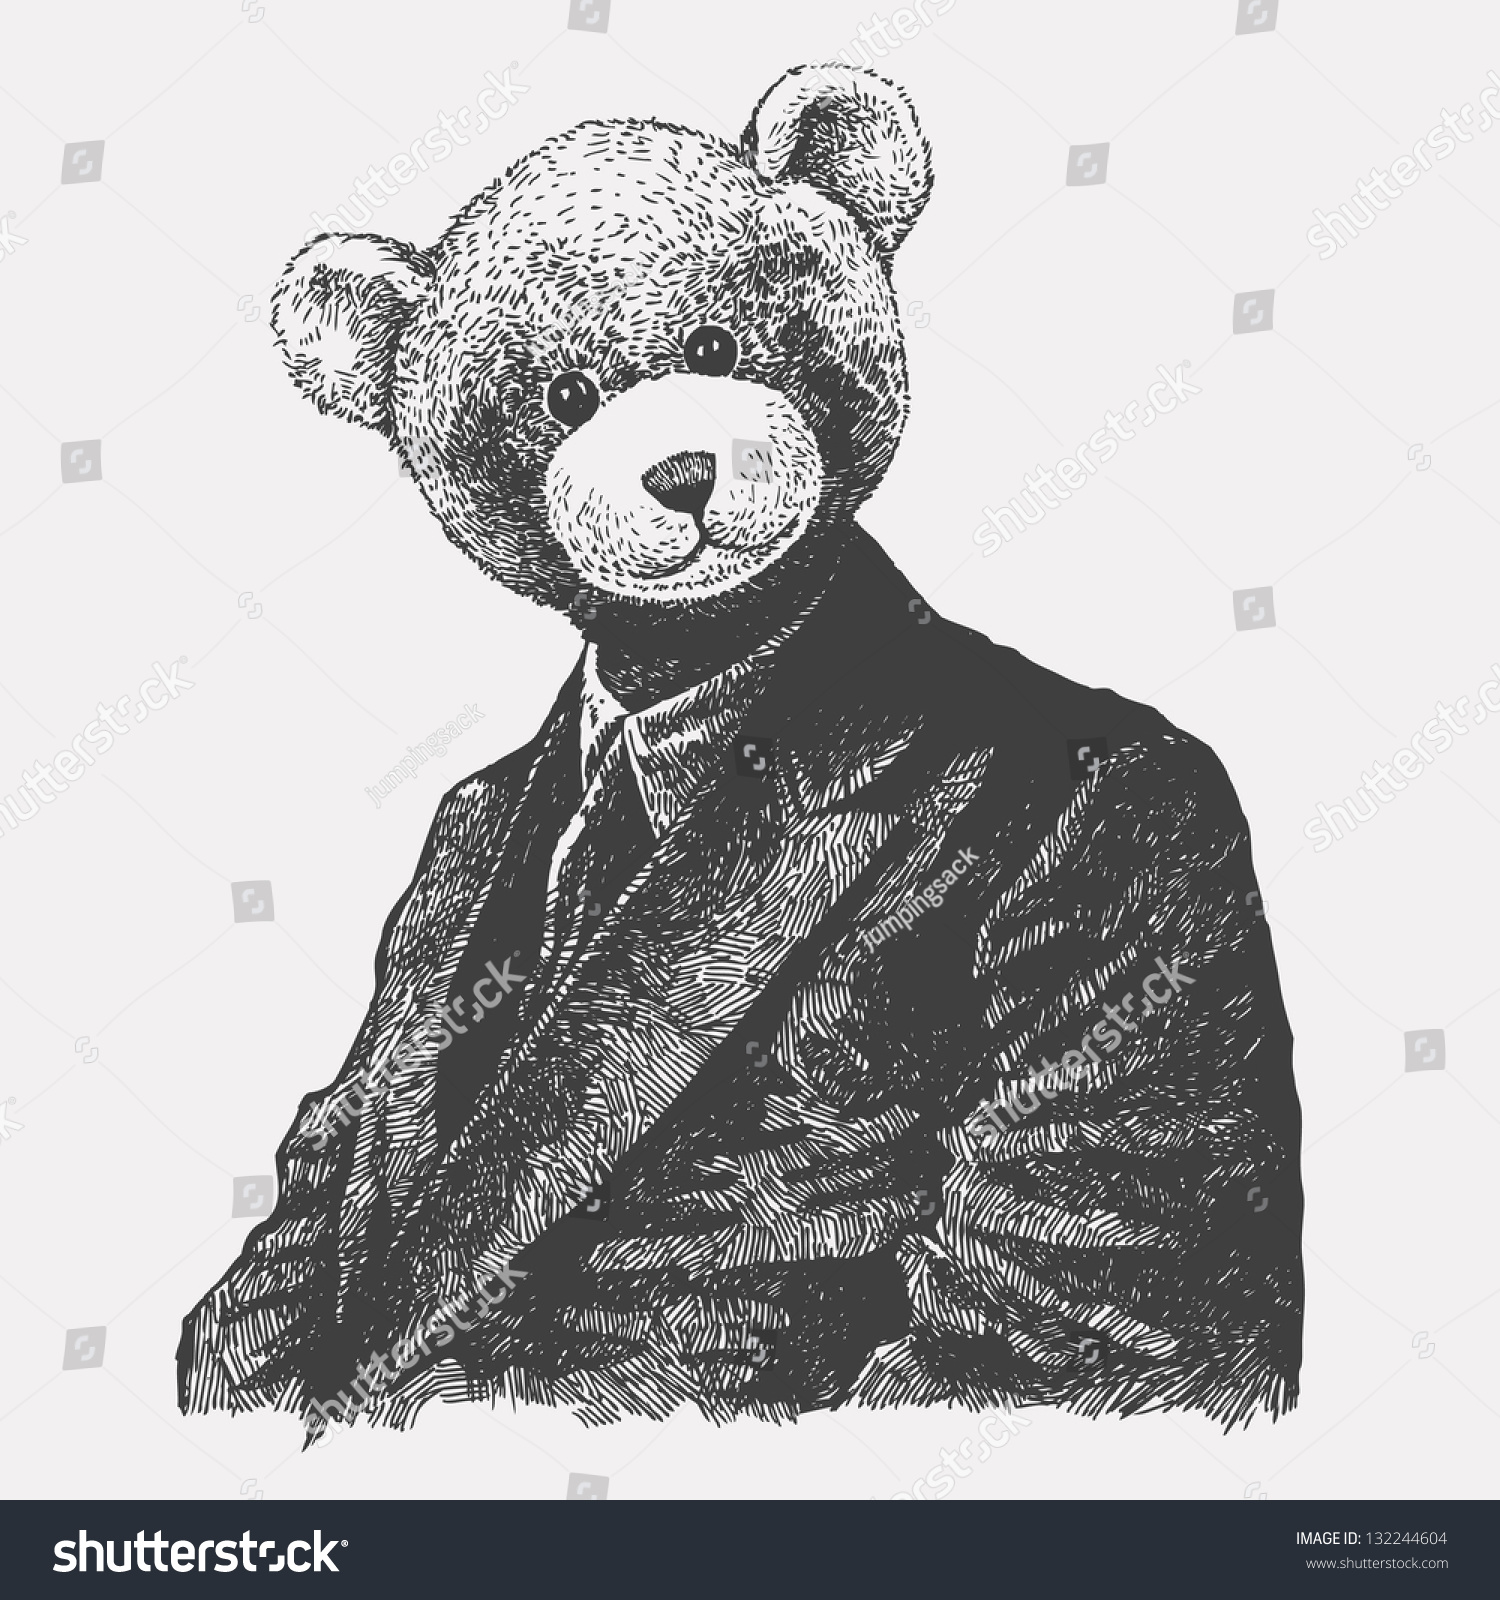 Man In A Bear Mask Drawing Style Stock Photo 132244604 Avopix Com